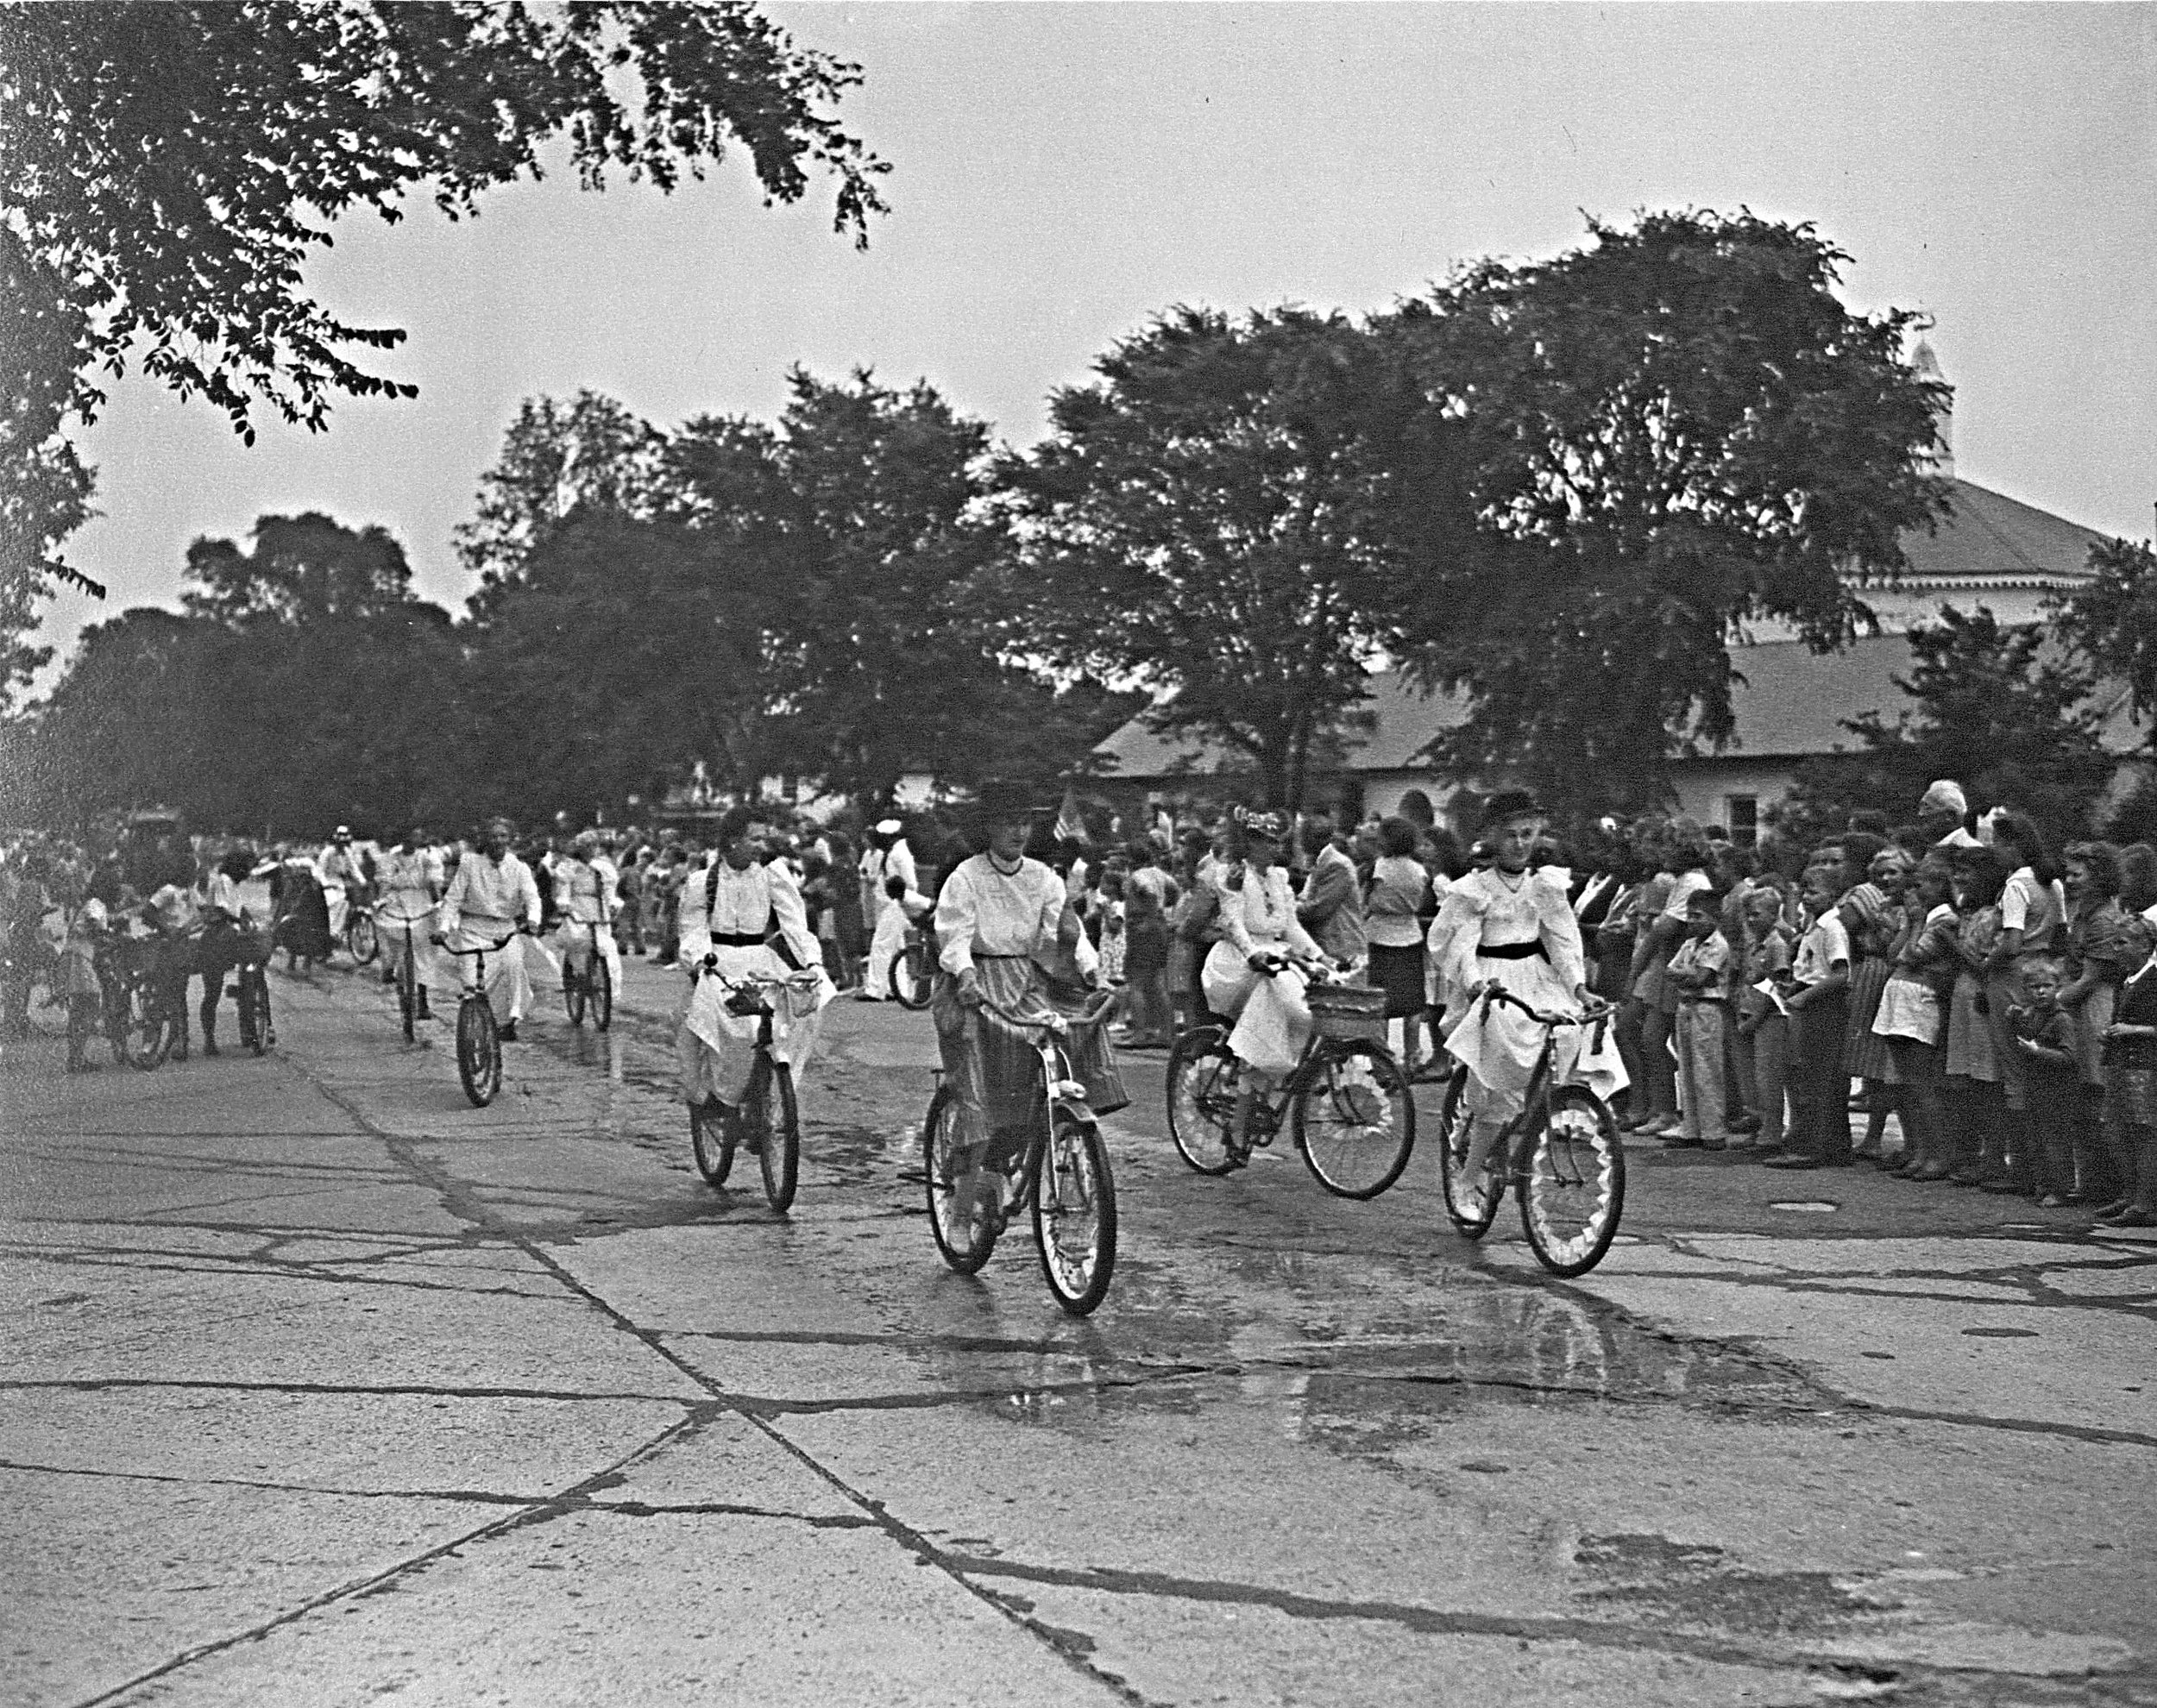 LVIS members  on bikes, LVIS 50th Anniversary